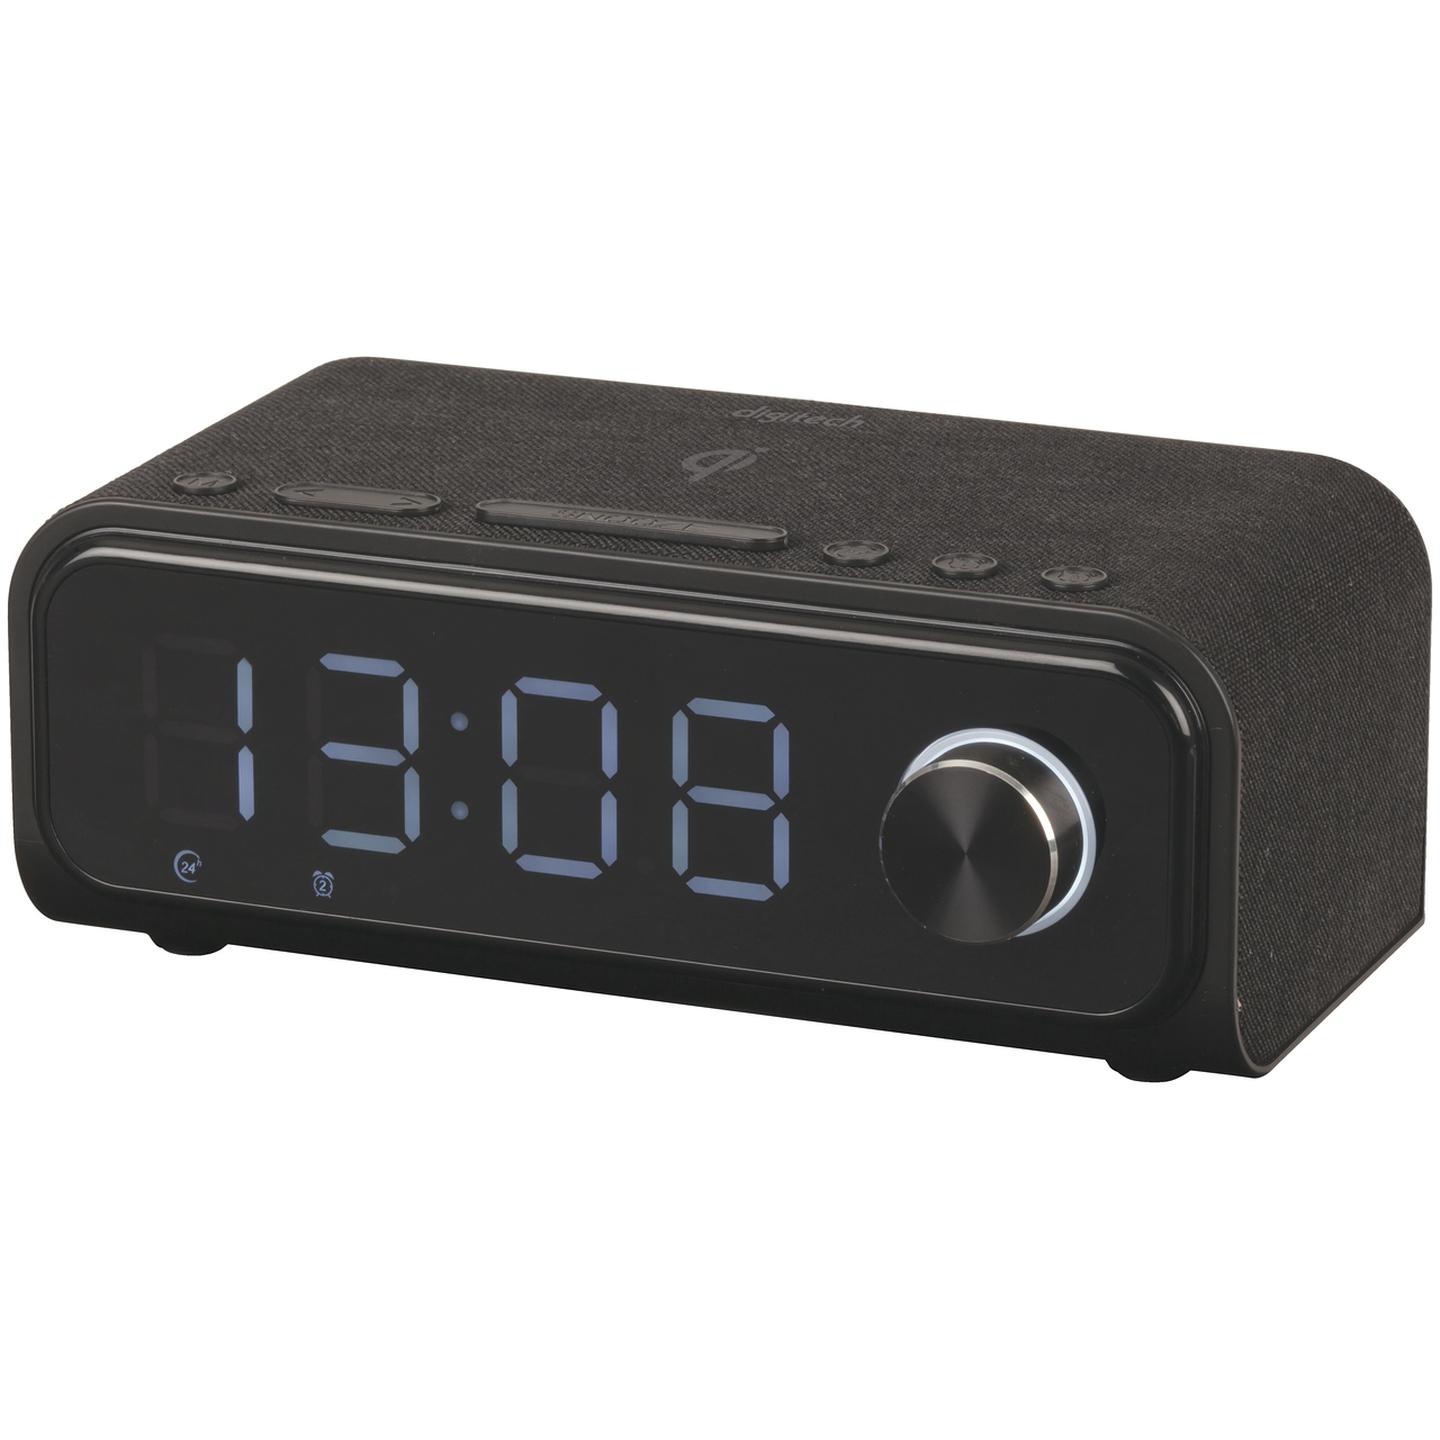 Alarm LED Clock Radio with QI Wireless Charging